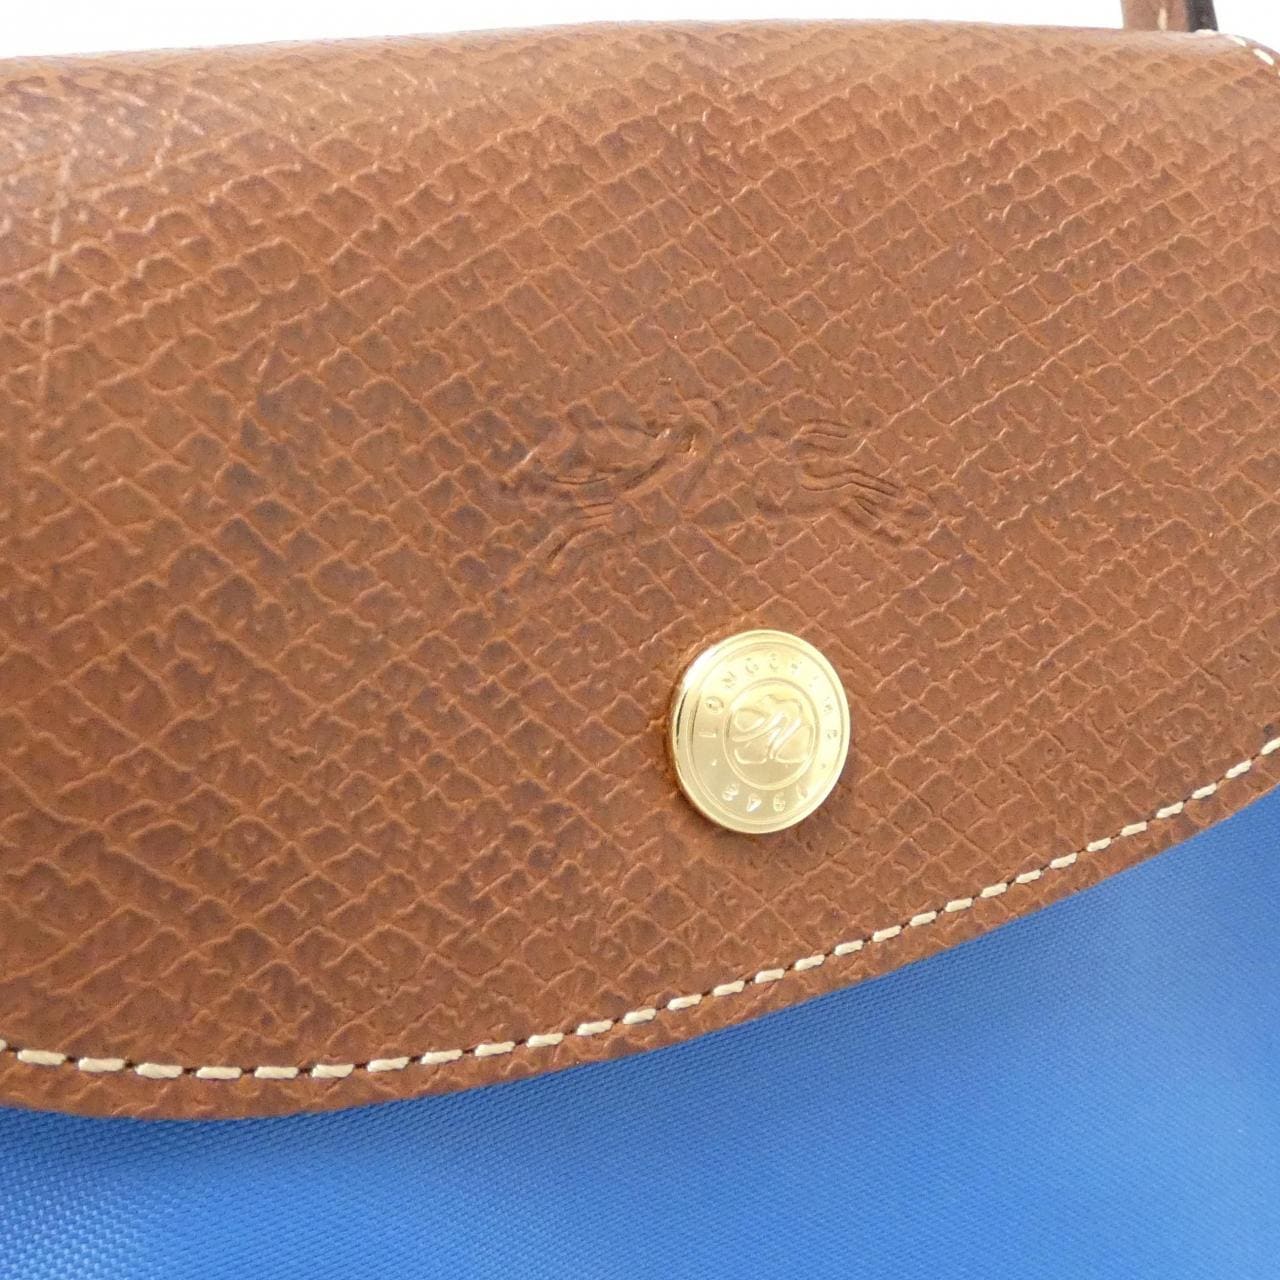 [BRAND NEW] Longchamp Le Pliage S 1621 089 Bag